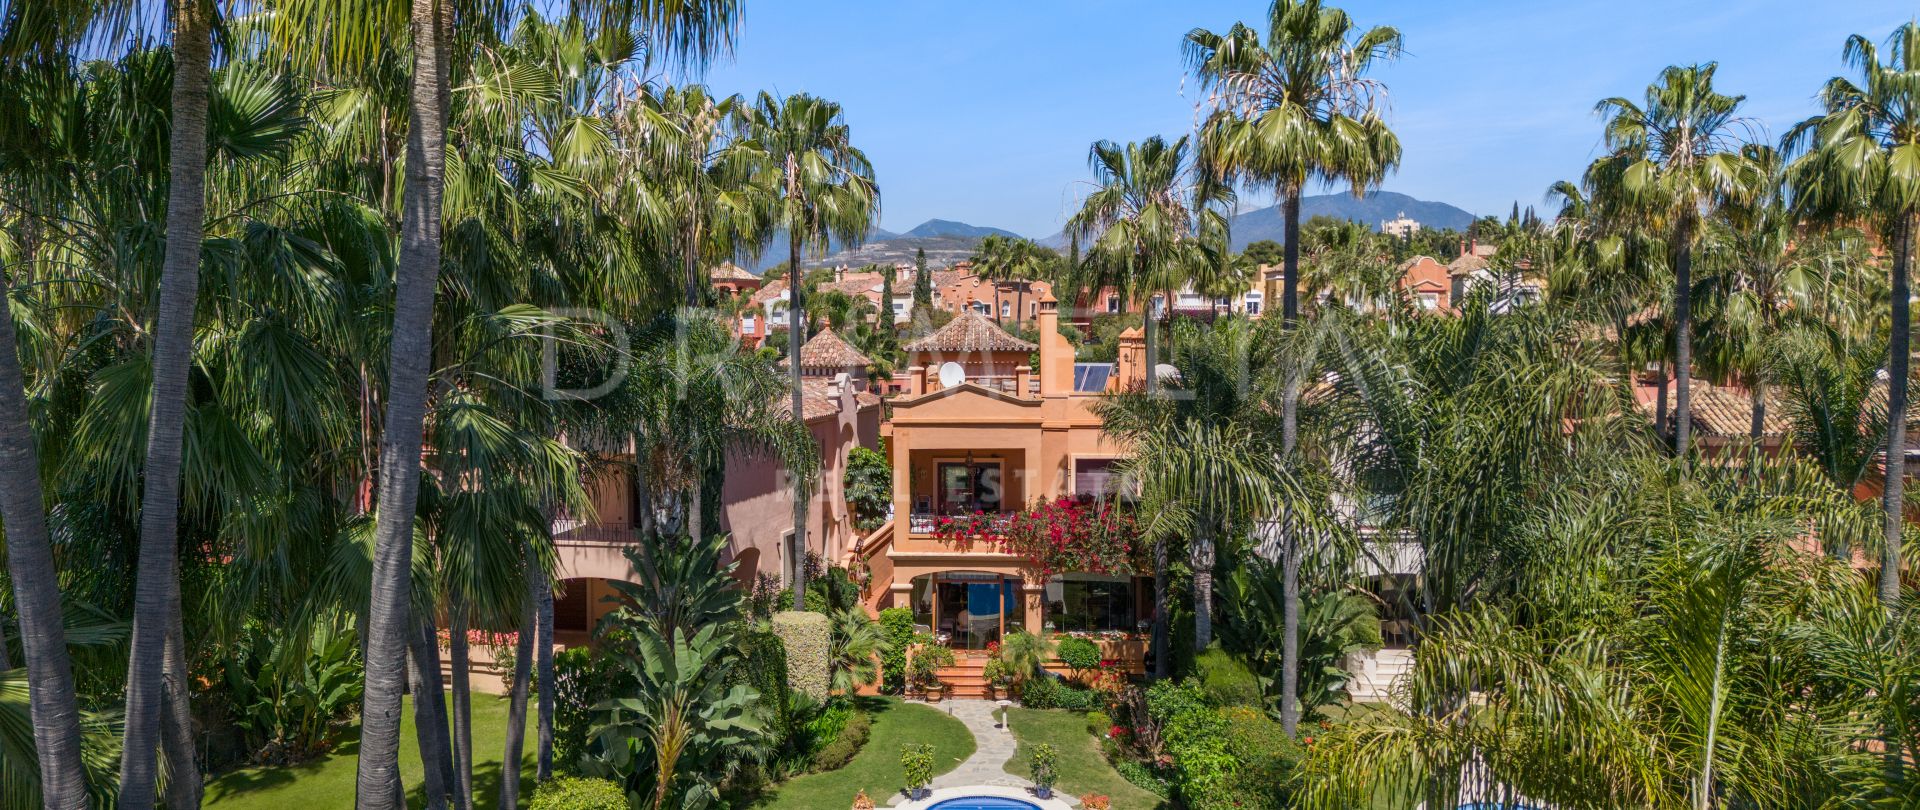 Confortable villa familiale méditerranéenne classique à La Alzambra, Nueva Andalucia, Espagne.